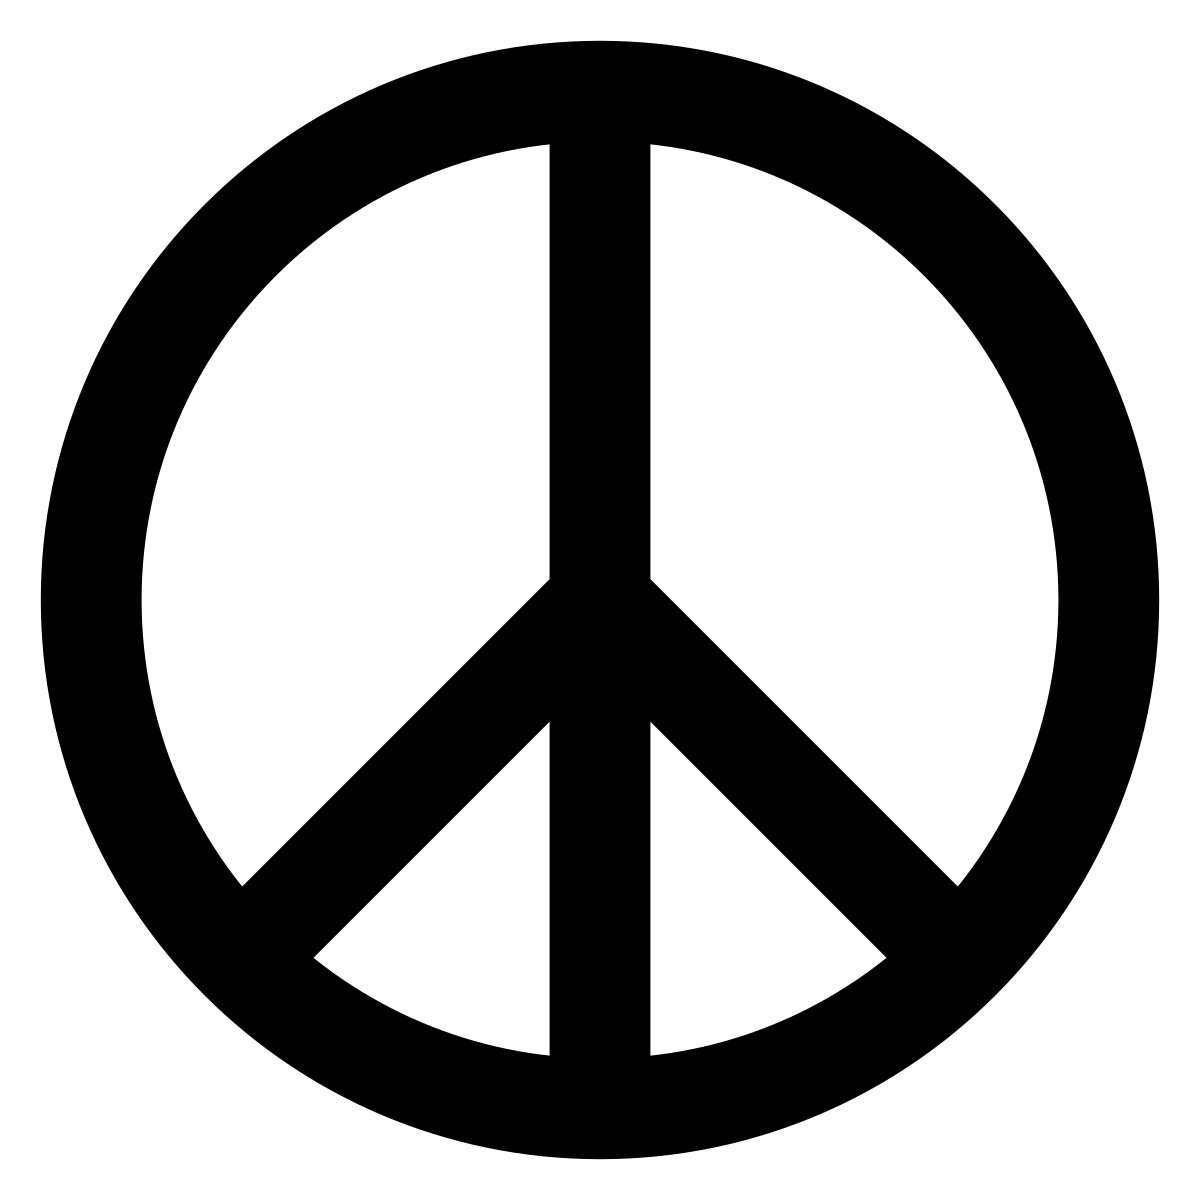 Peace Sign Company Logo - Peace symbols